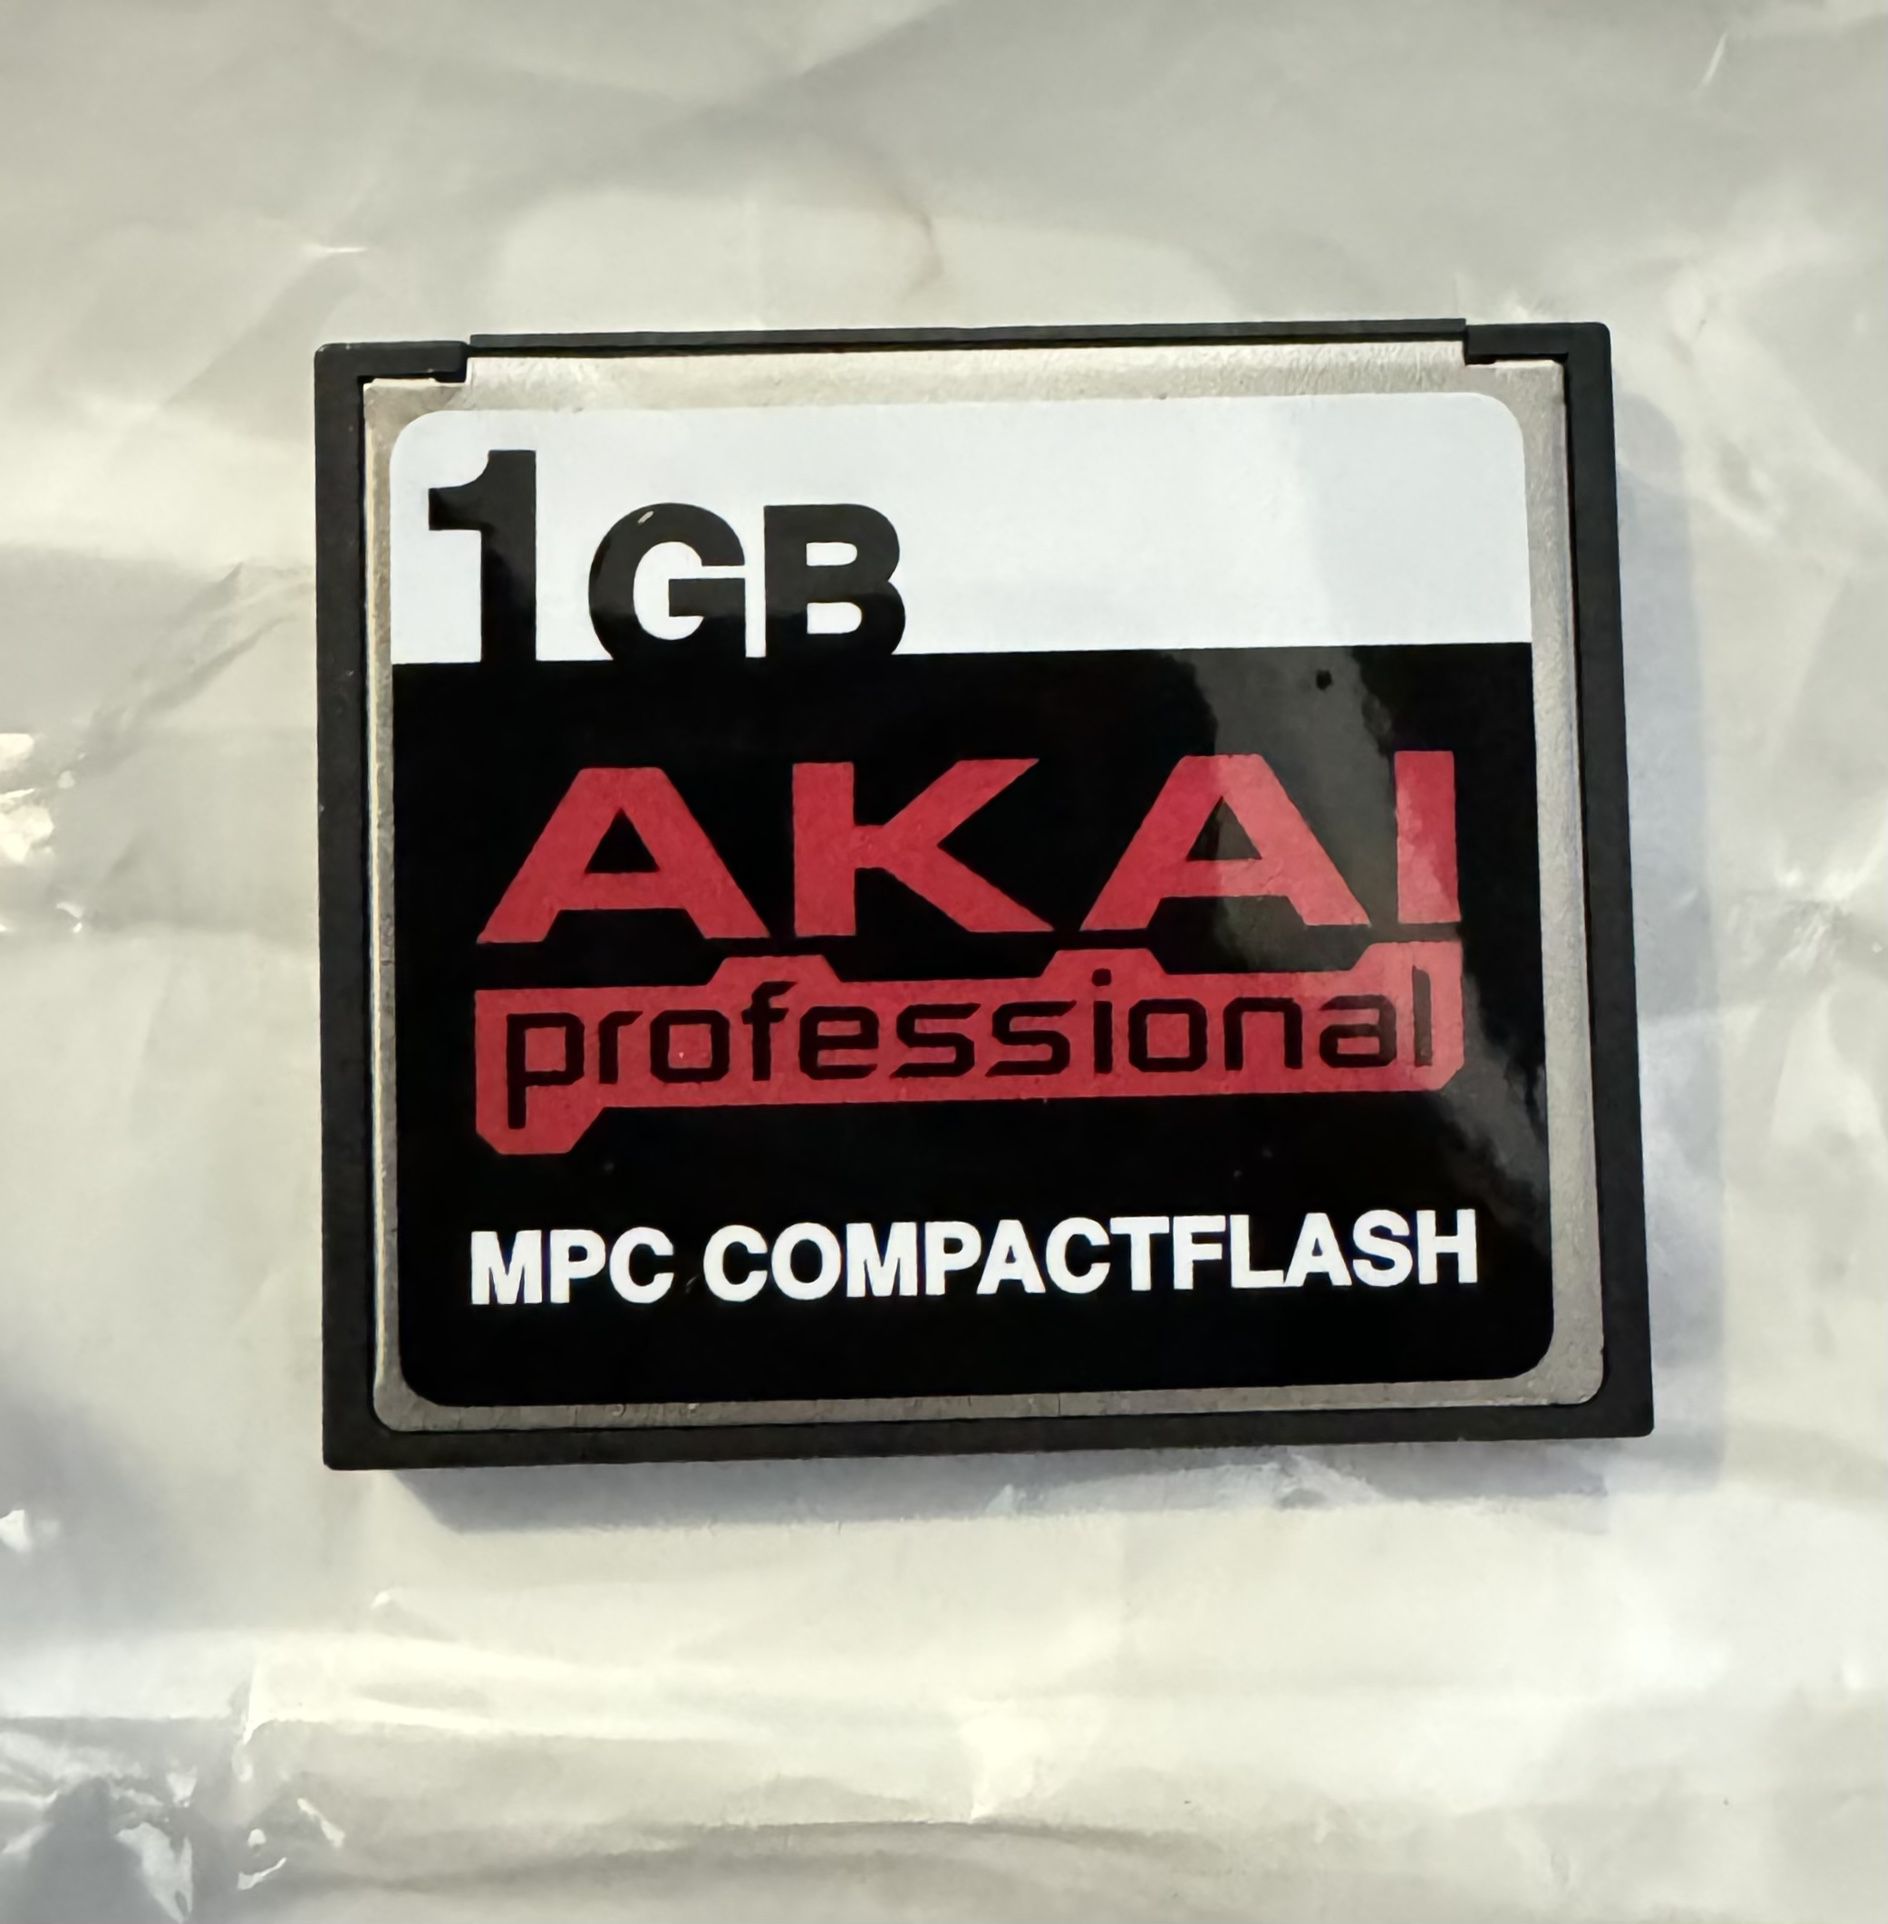 1GB AKAI Akai MPC CompactFlash CF Memory Card for MPC500, MPC1000, MPC2500 + more